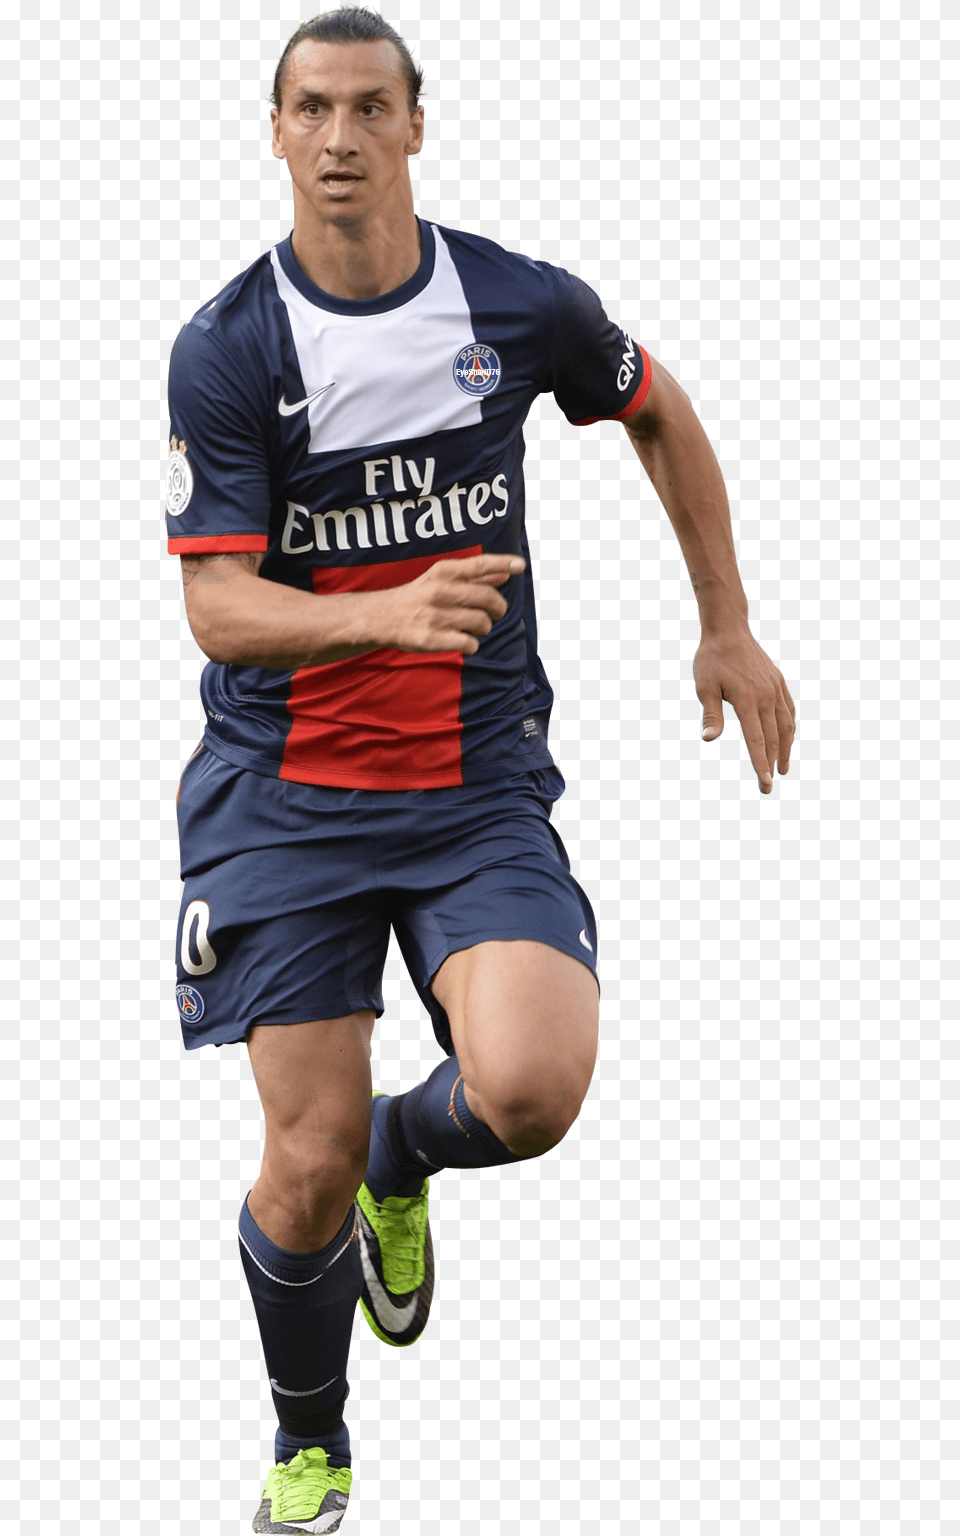 Run Zlatan Ibrahimovic Football Player, People, Body Part, Clothing, Shorts Png Image